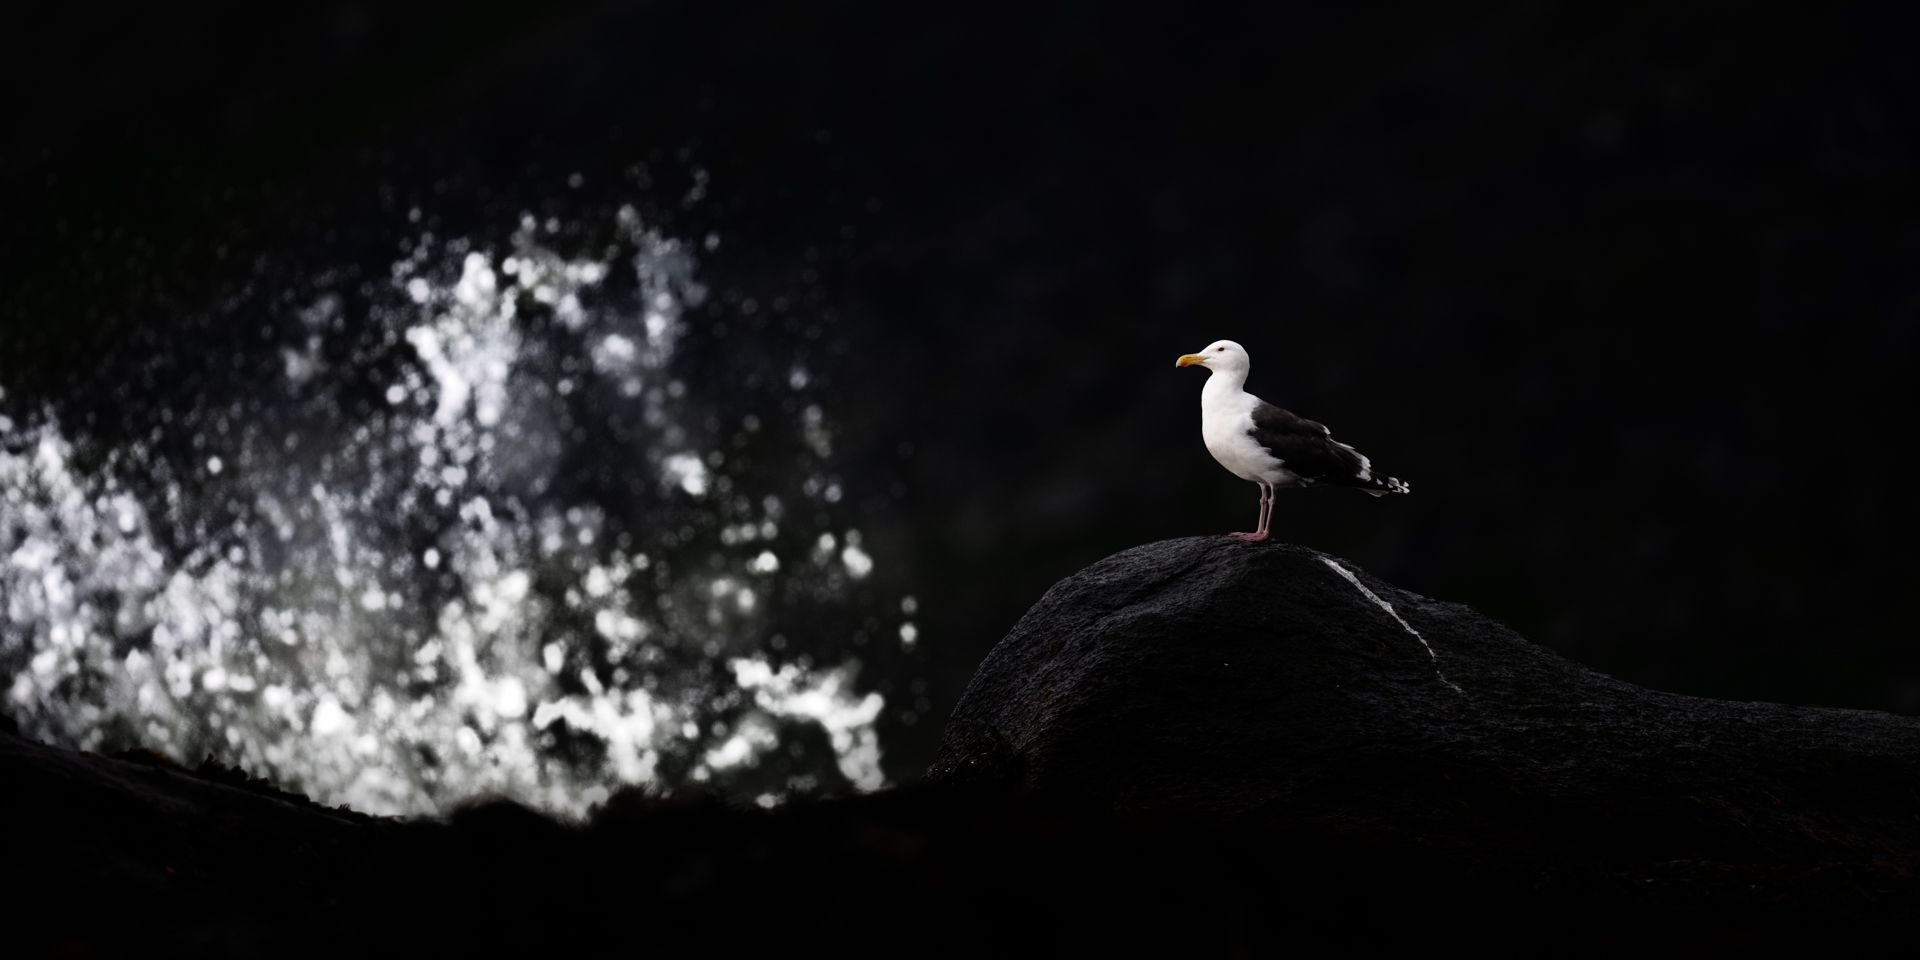 Birds photographed by wildlife photographer Nicolas Stettler.